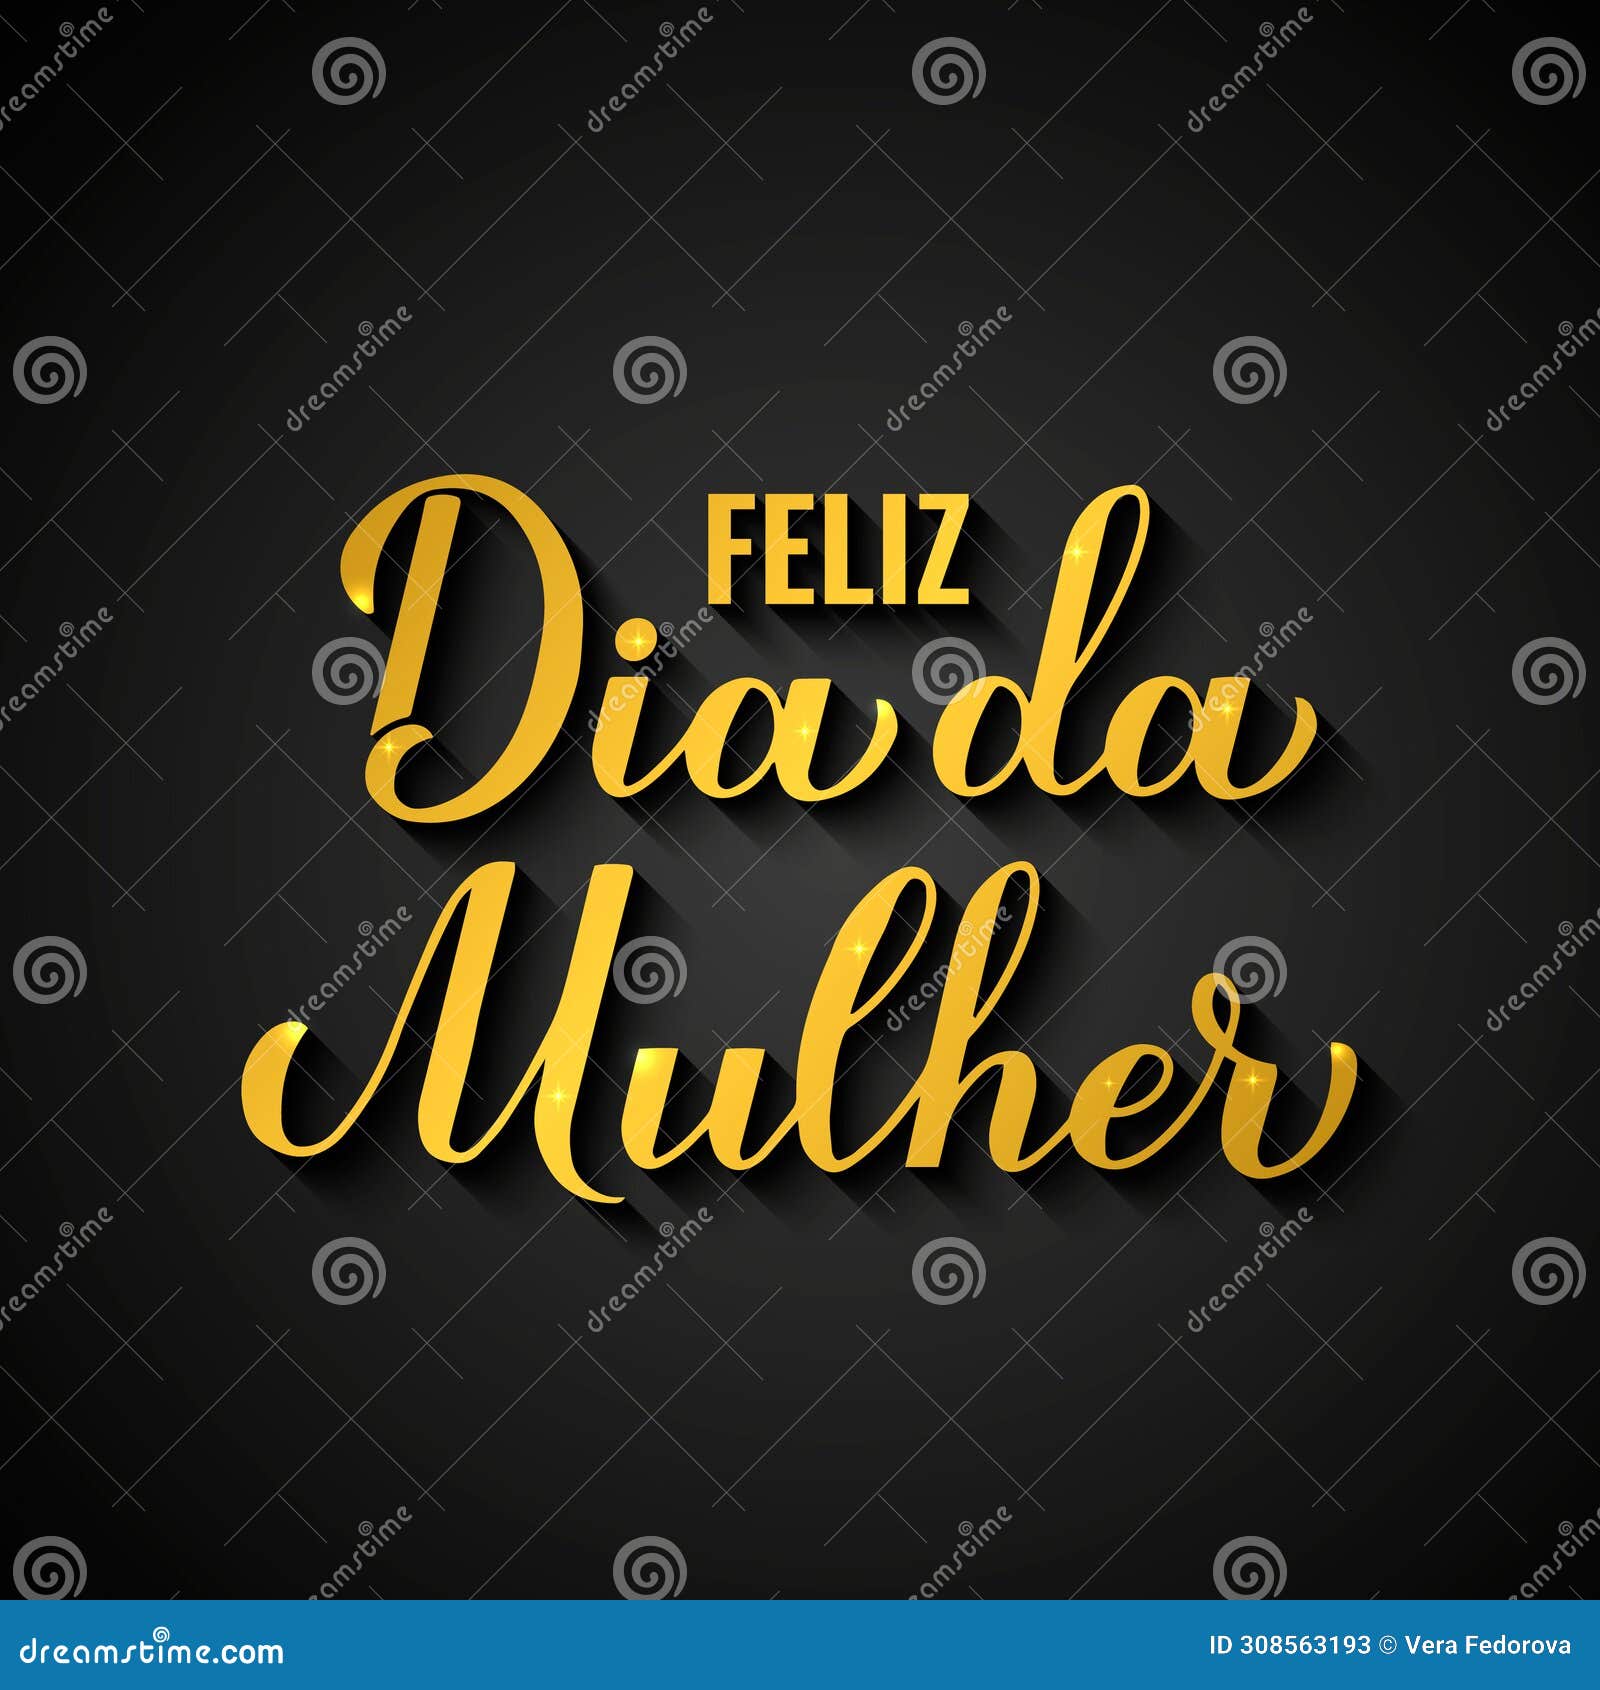 feliz dia da mulher - happy womens day in portuguese. gold inscription on black background. international womans day